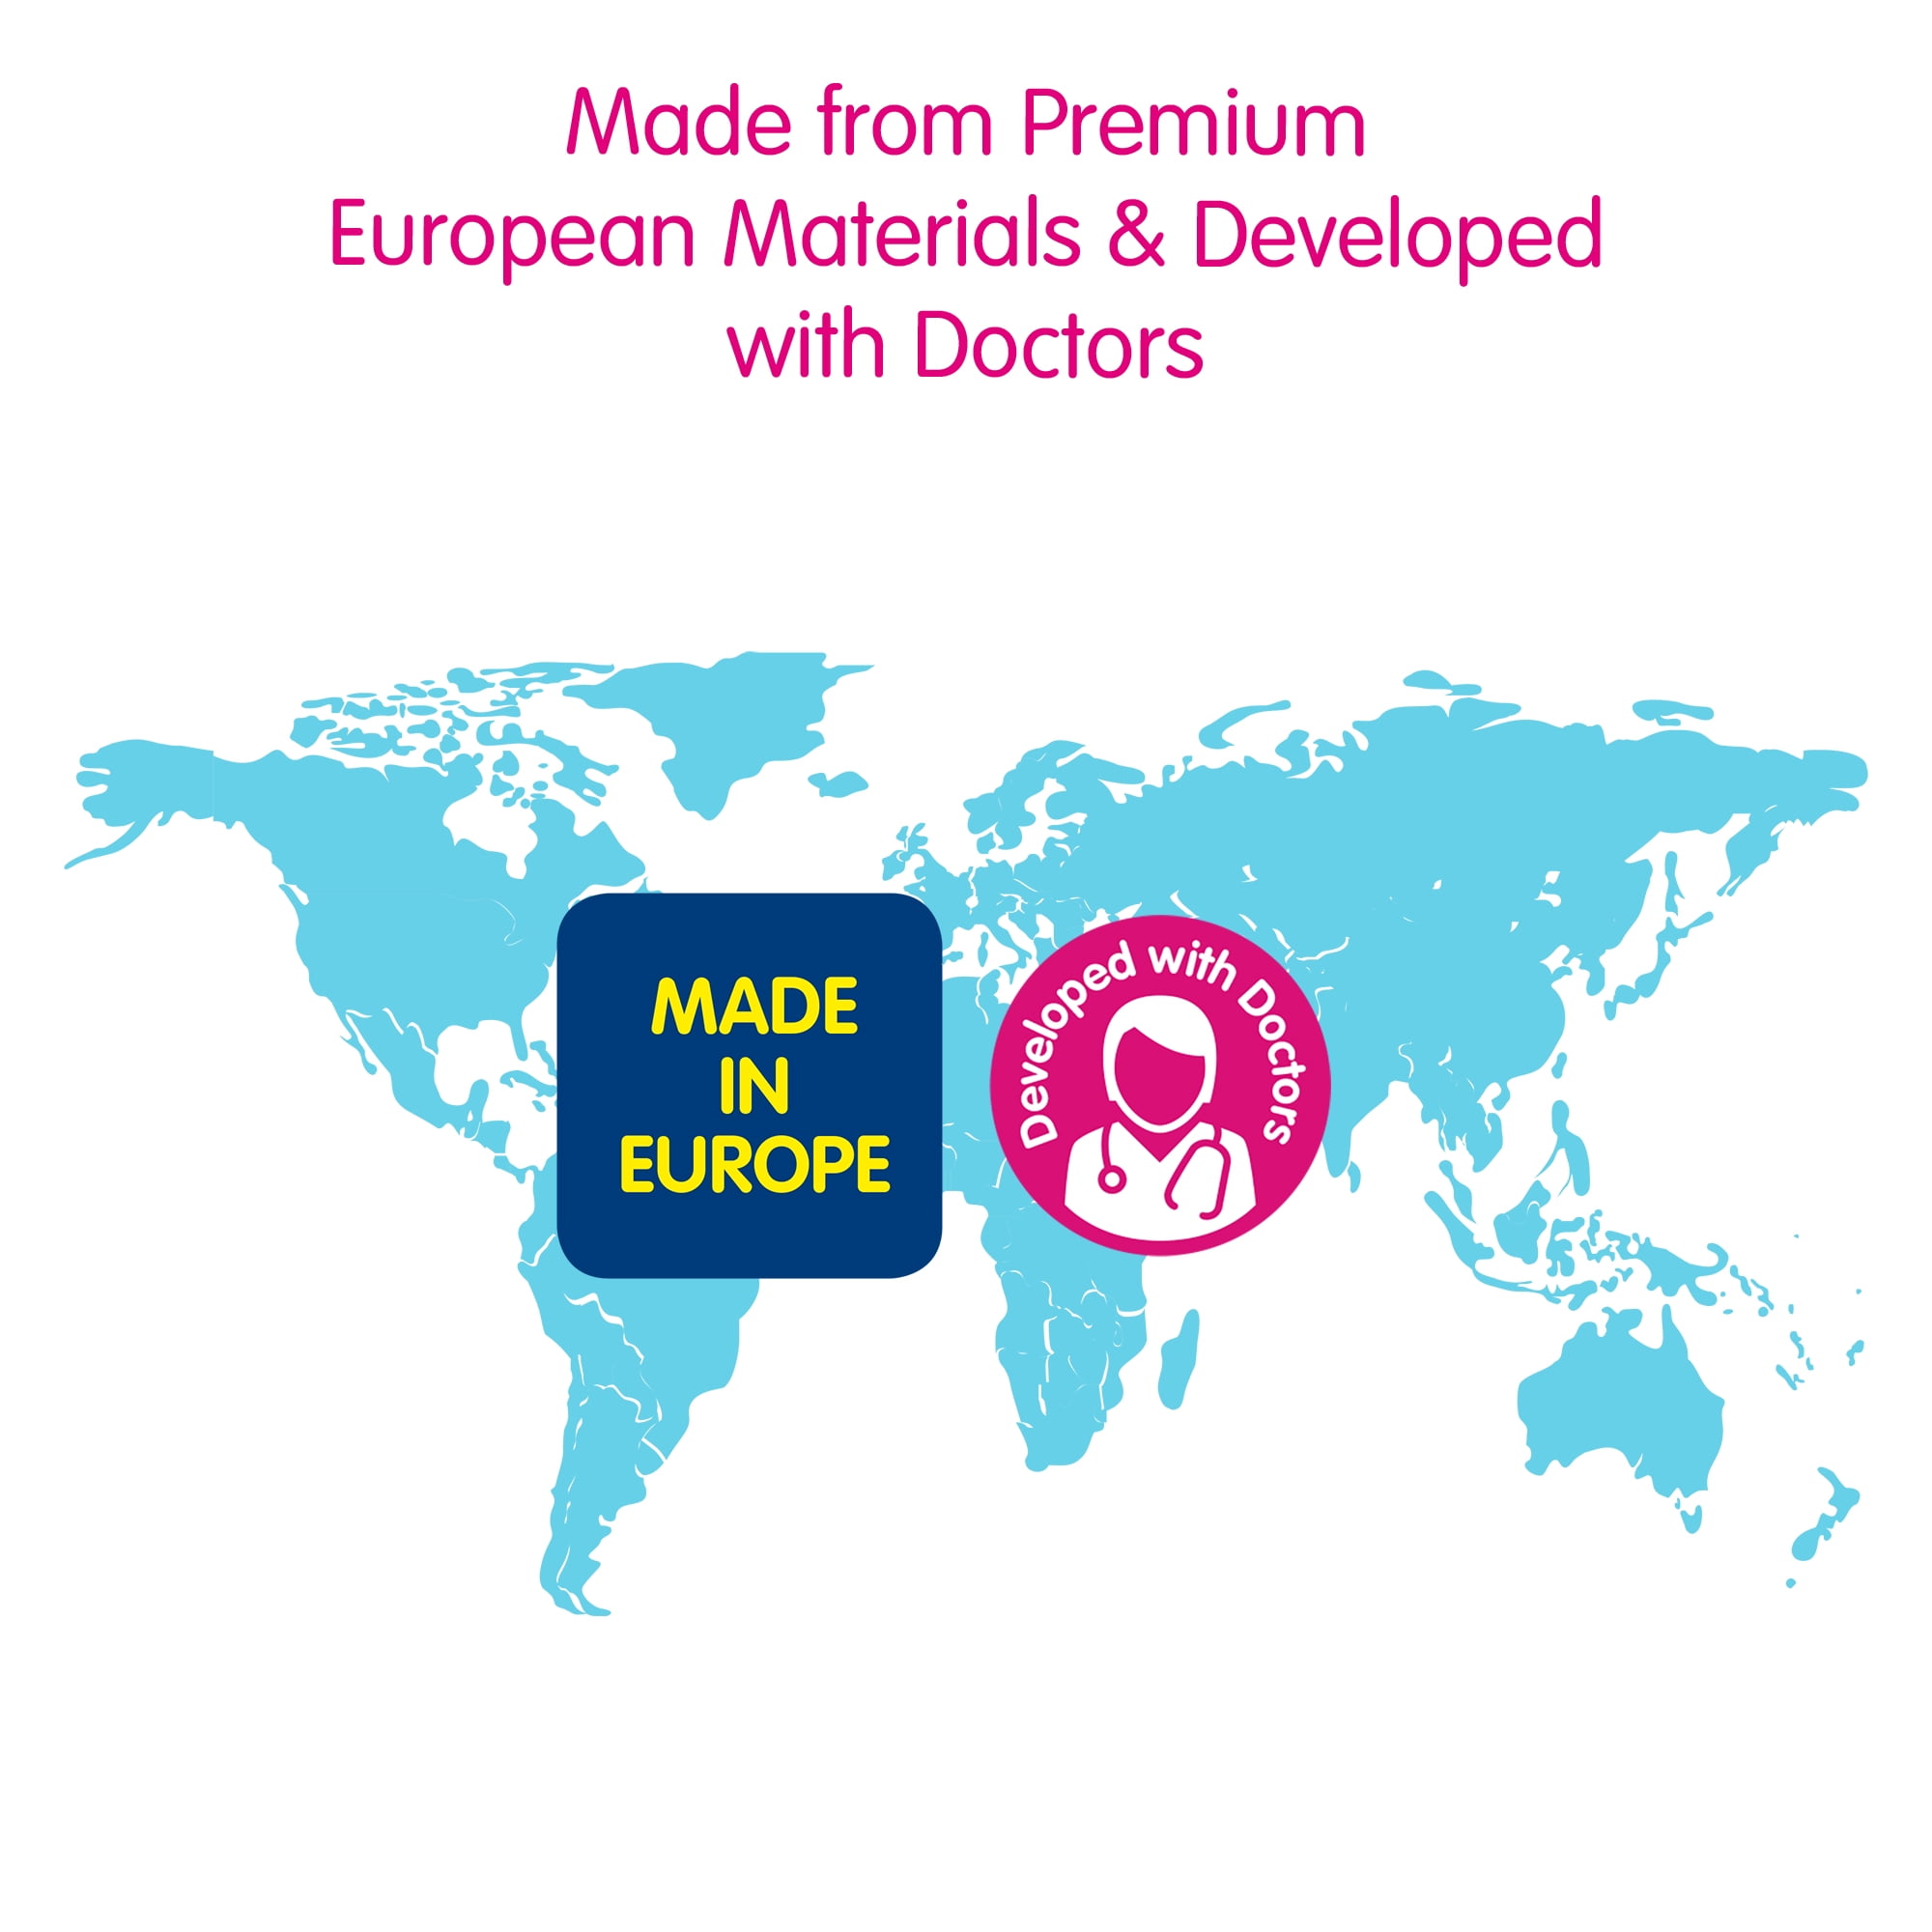 Mam Perfect Pacifier 16+ Months - Blue / Pink / Grey – Baby Stork  (MRI2015/1030)